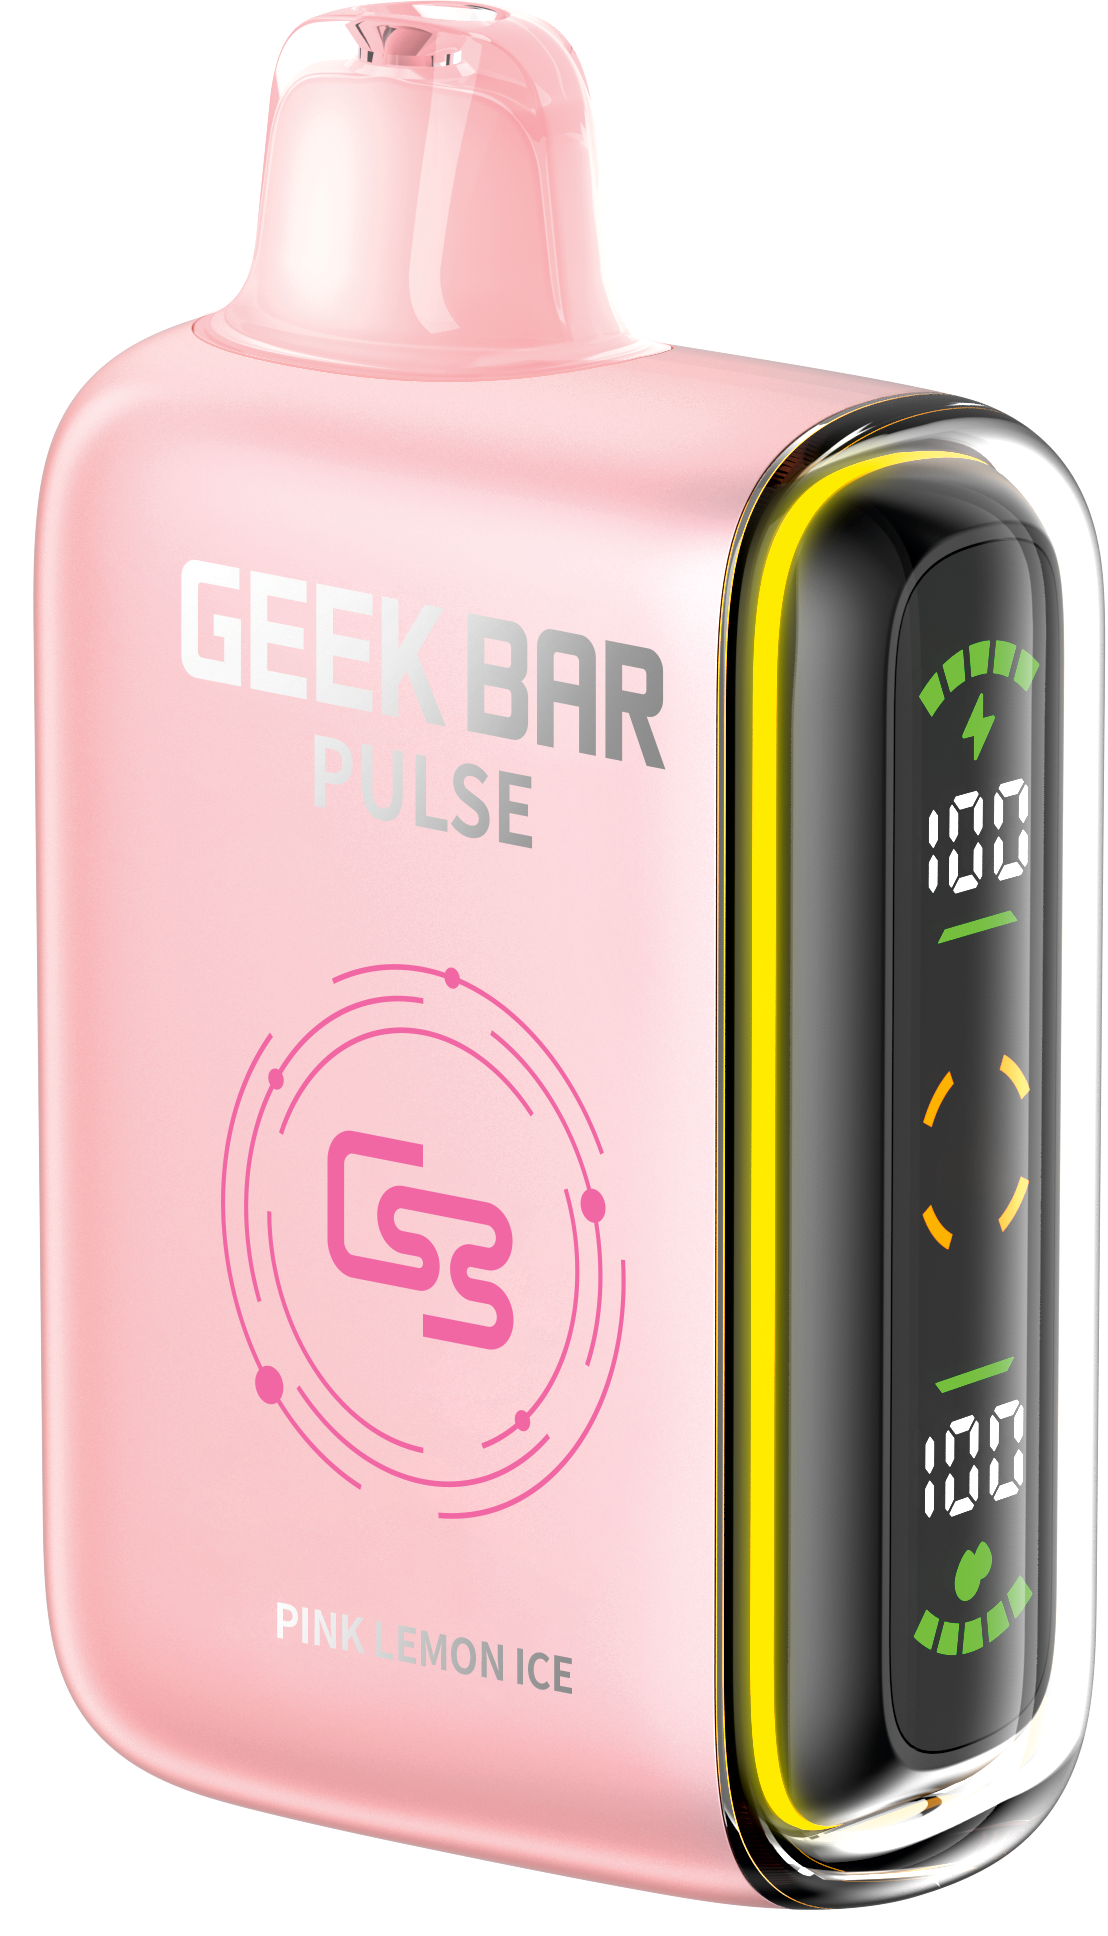 Geek Bar Pulse 9000 Puff Disposable